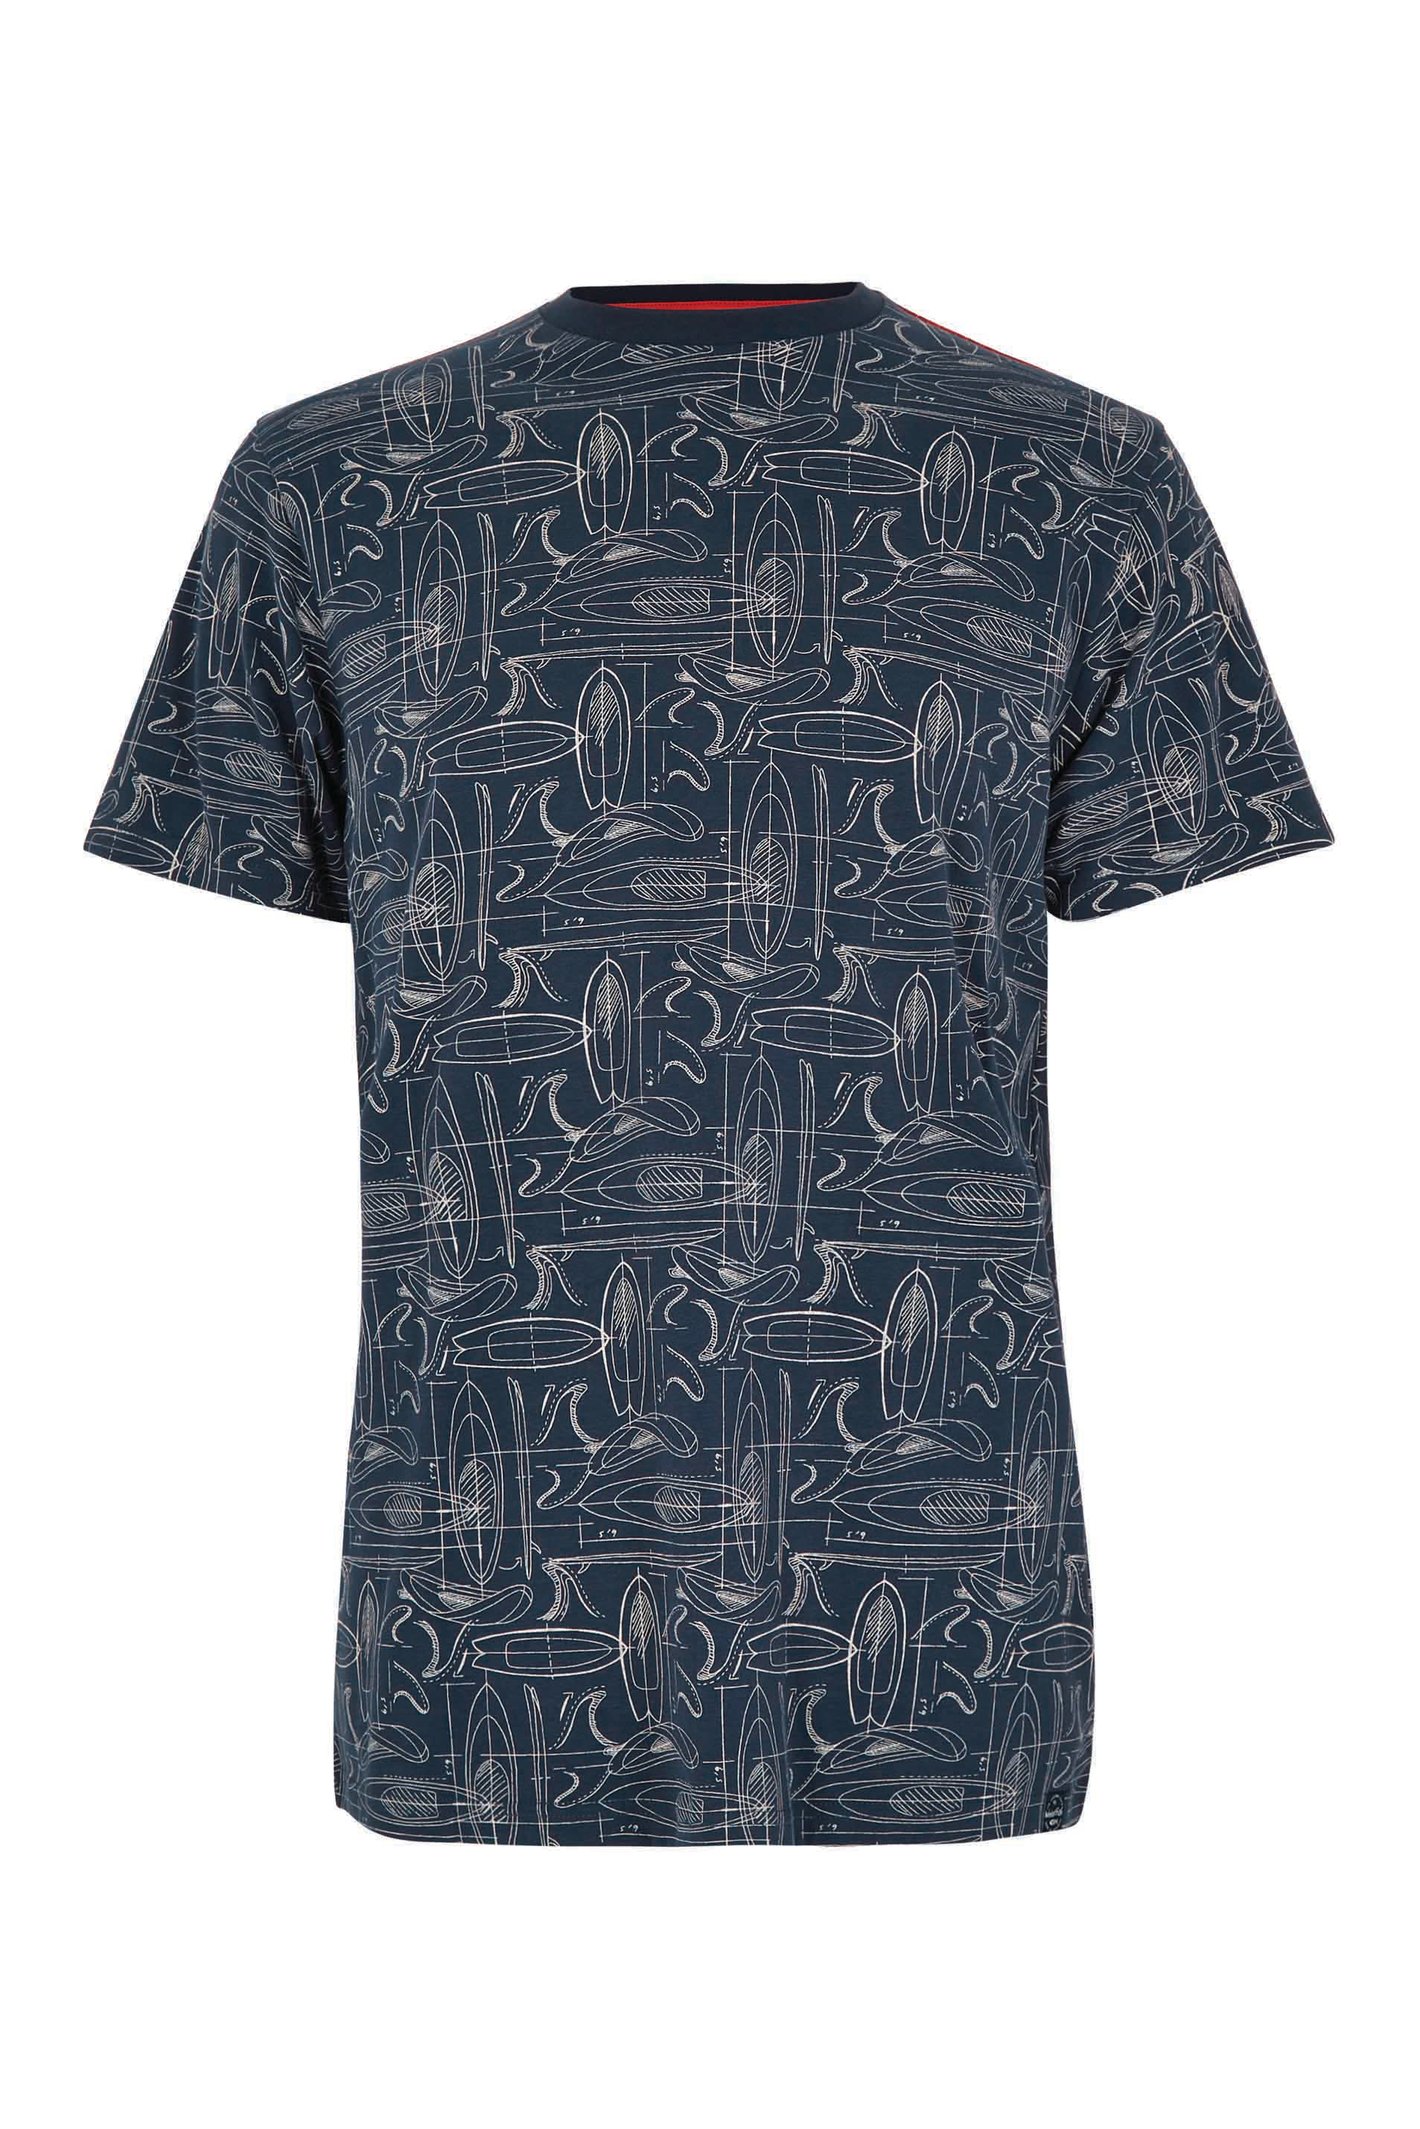 Weird Fish Howes Organic Cotton Printed T-Shirt Navy Size 3XL